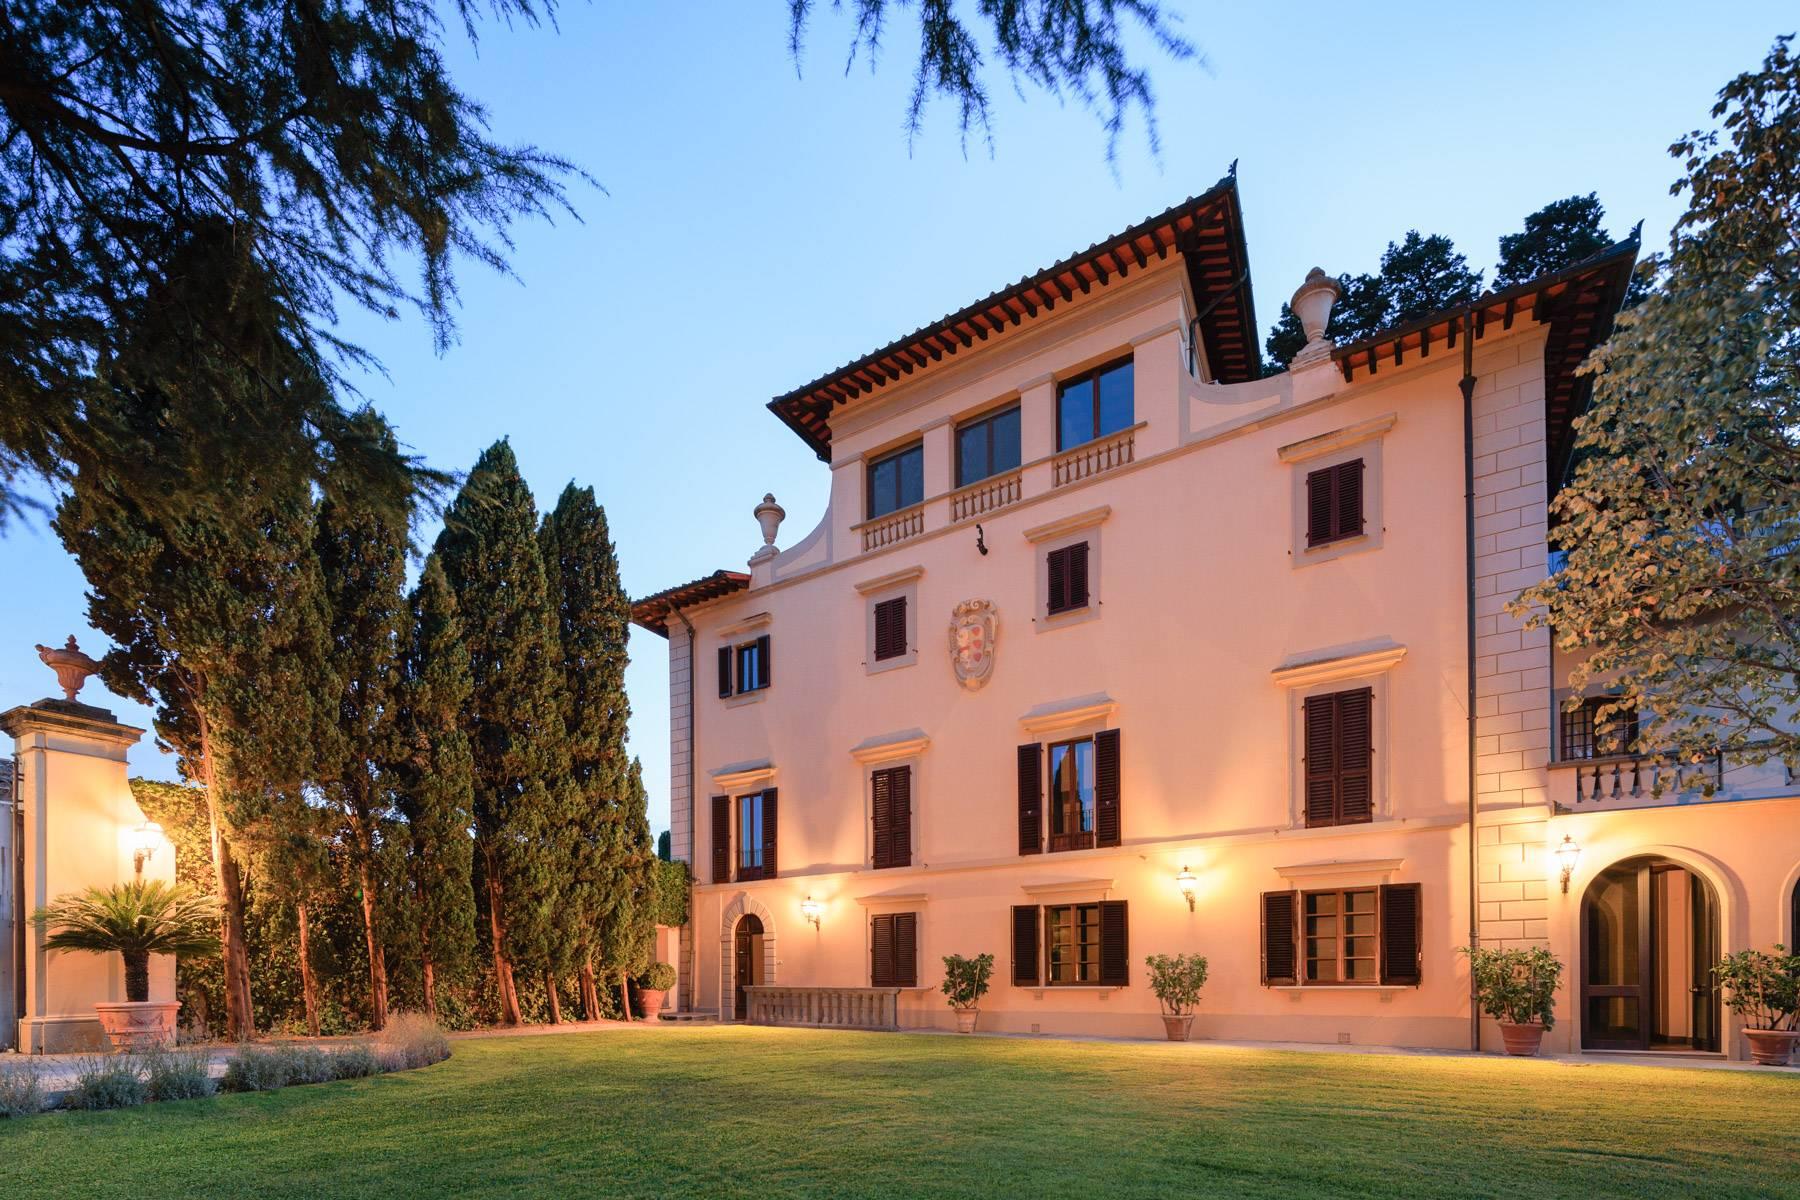 Apartment in a historic villa on the hills of Carmignano - 30